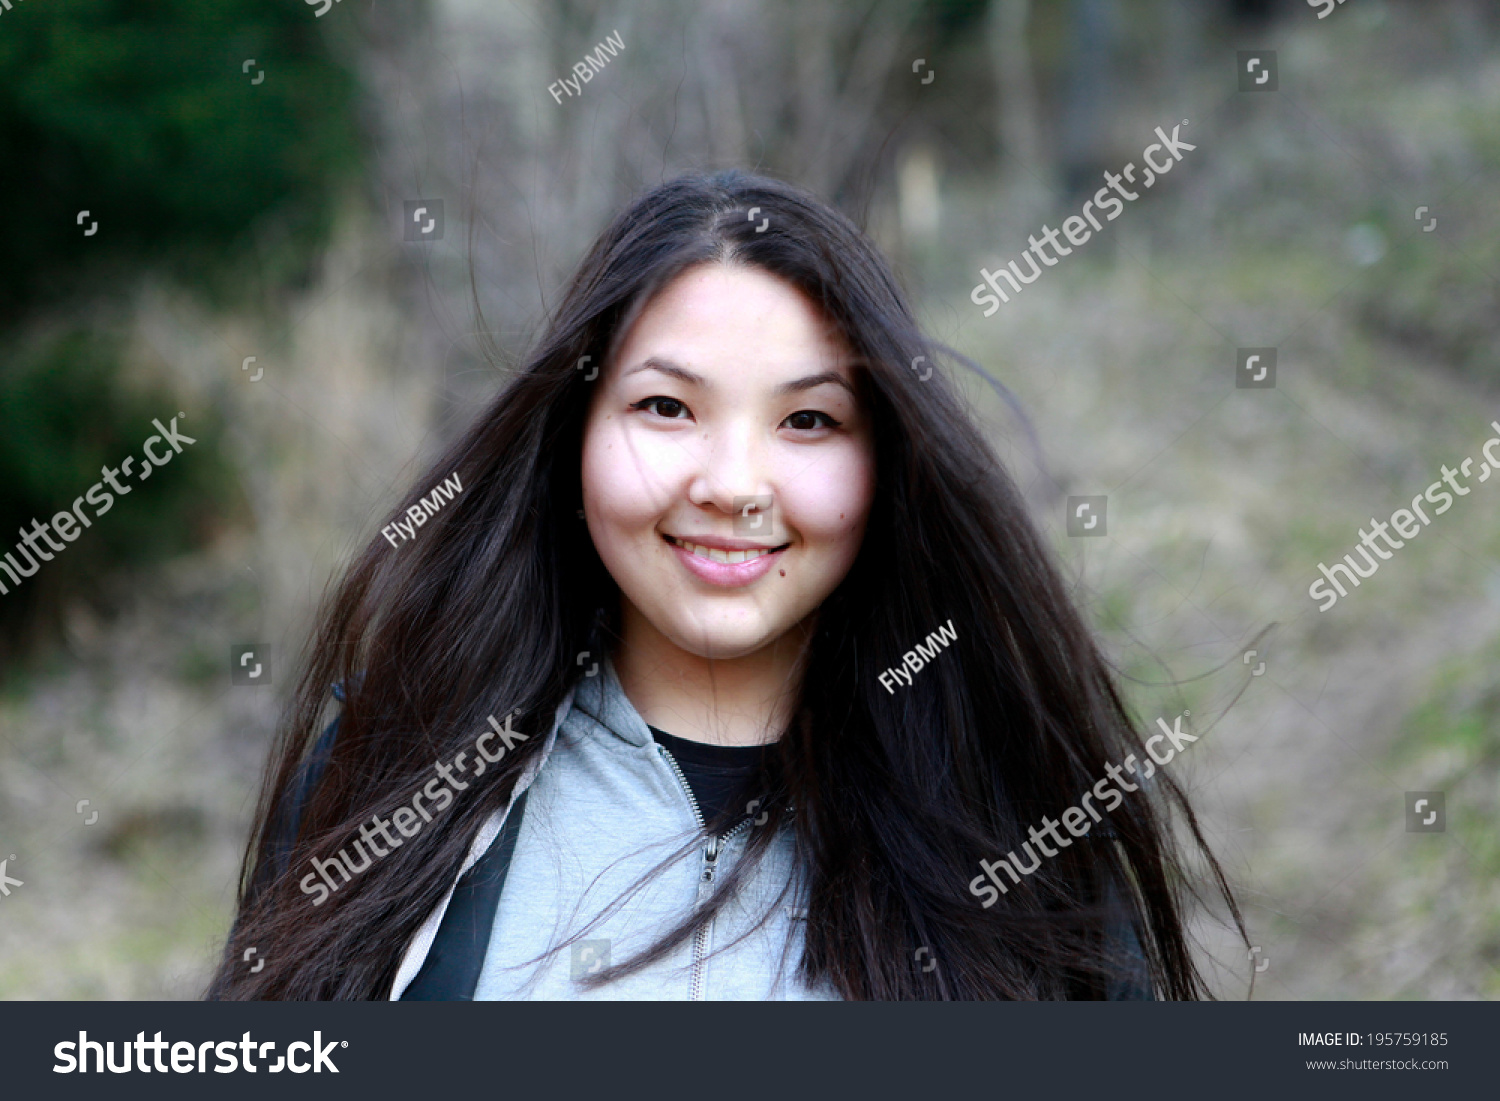 Kazakhstan girl